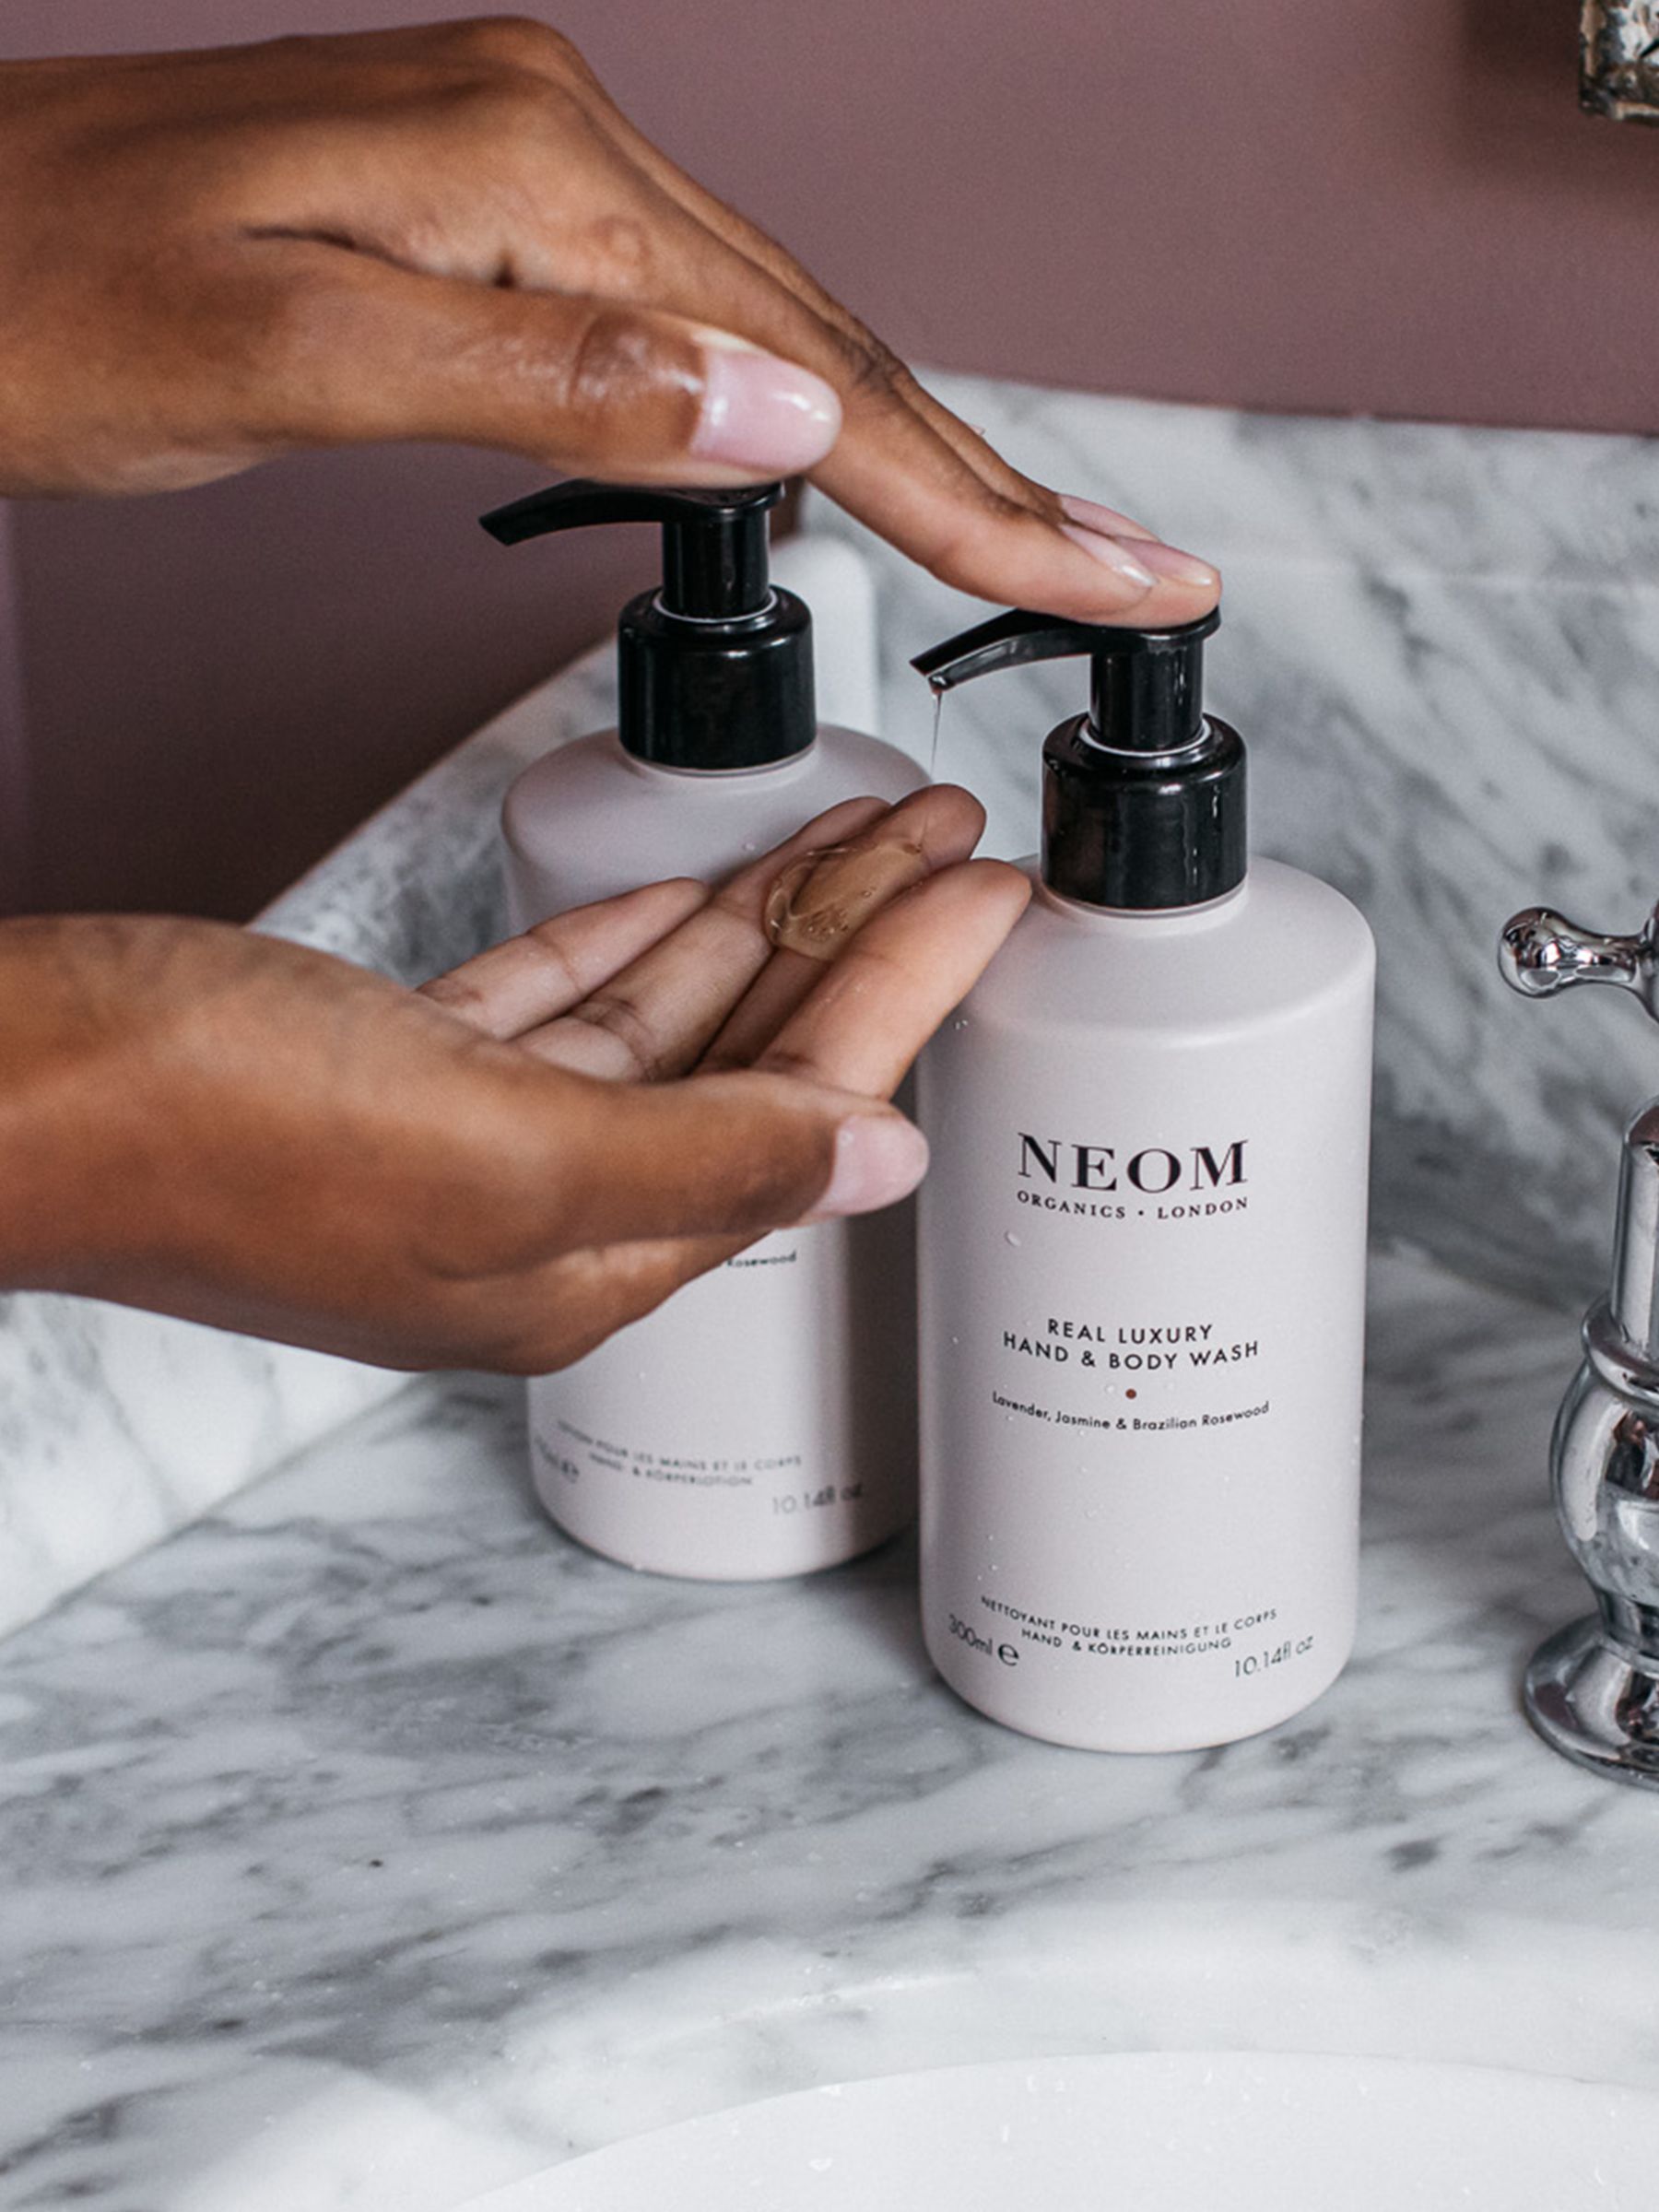 Neom Organics London  Real Luxury Hand & Body Wash, 300ml 2